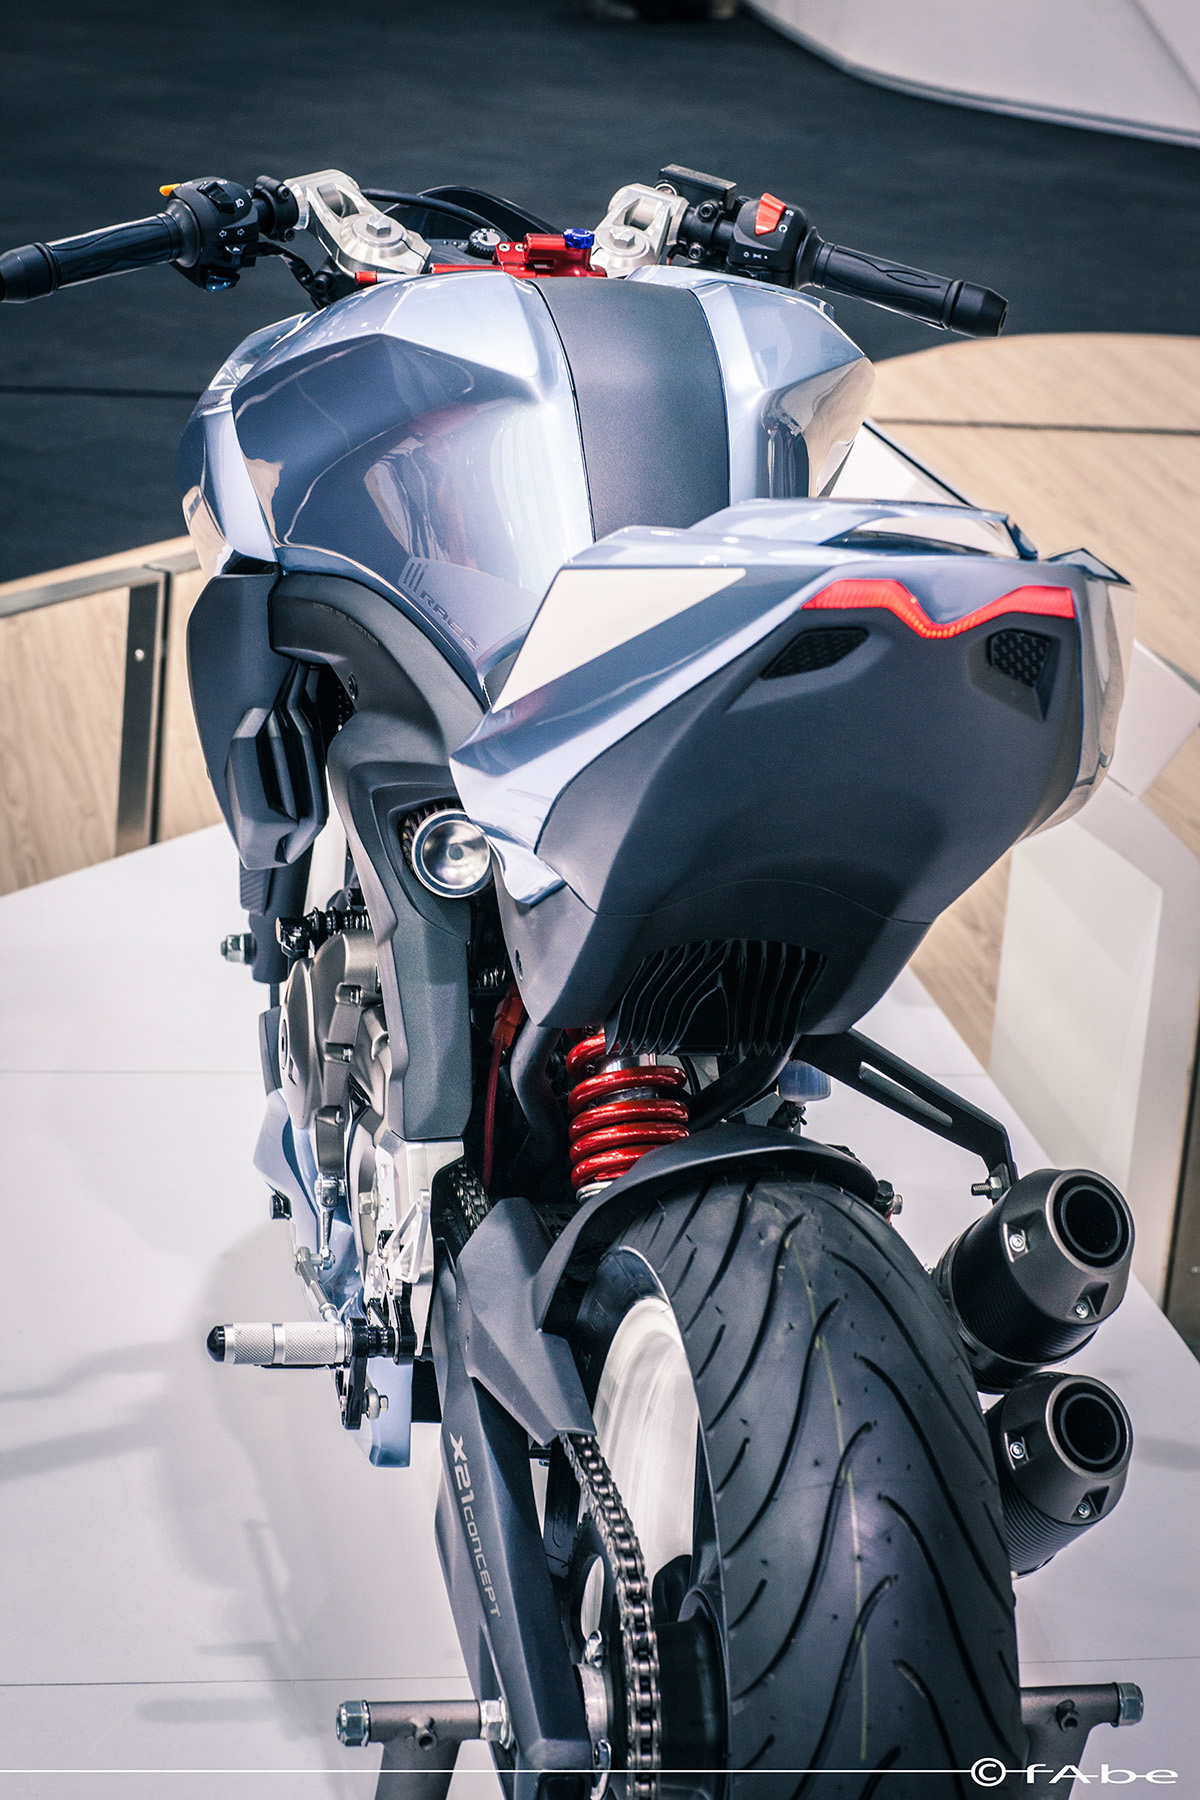 Adobe Portfolio TVS motor TVS X21 TVS X21 Concept X21 Concept Racer Next Generation Apache X21 Concept Bike 212cc TVS X21 2016 TVS X21 Racer